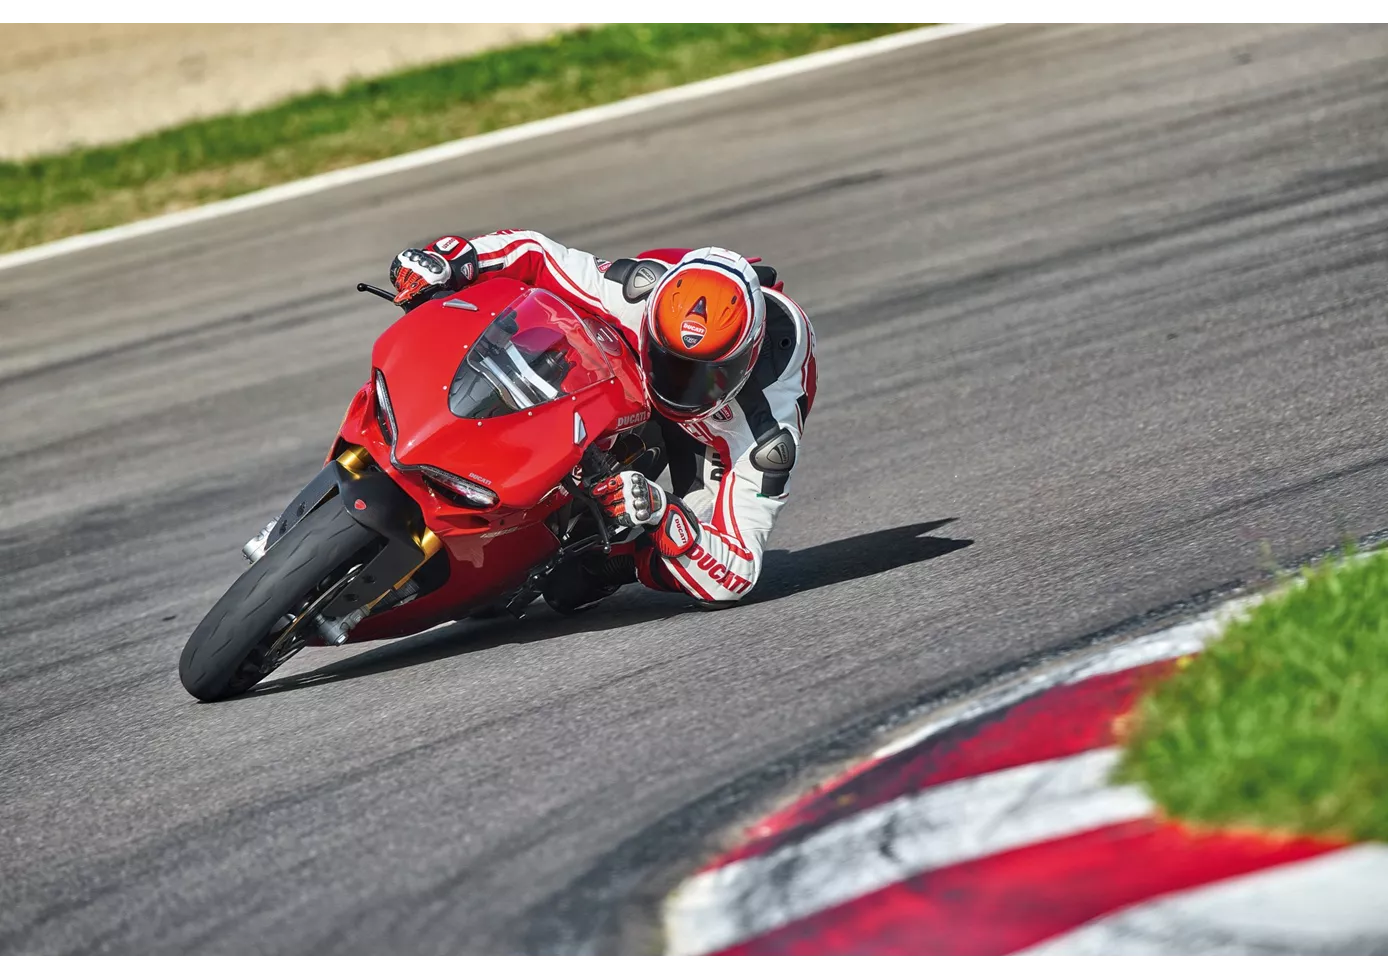 Ducati 1299 Panigale S 2015